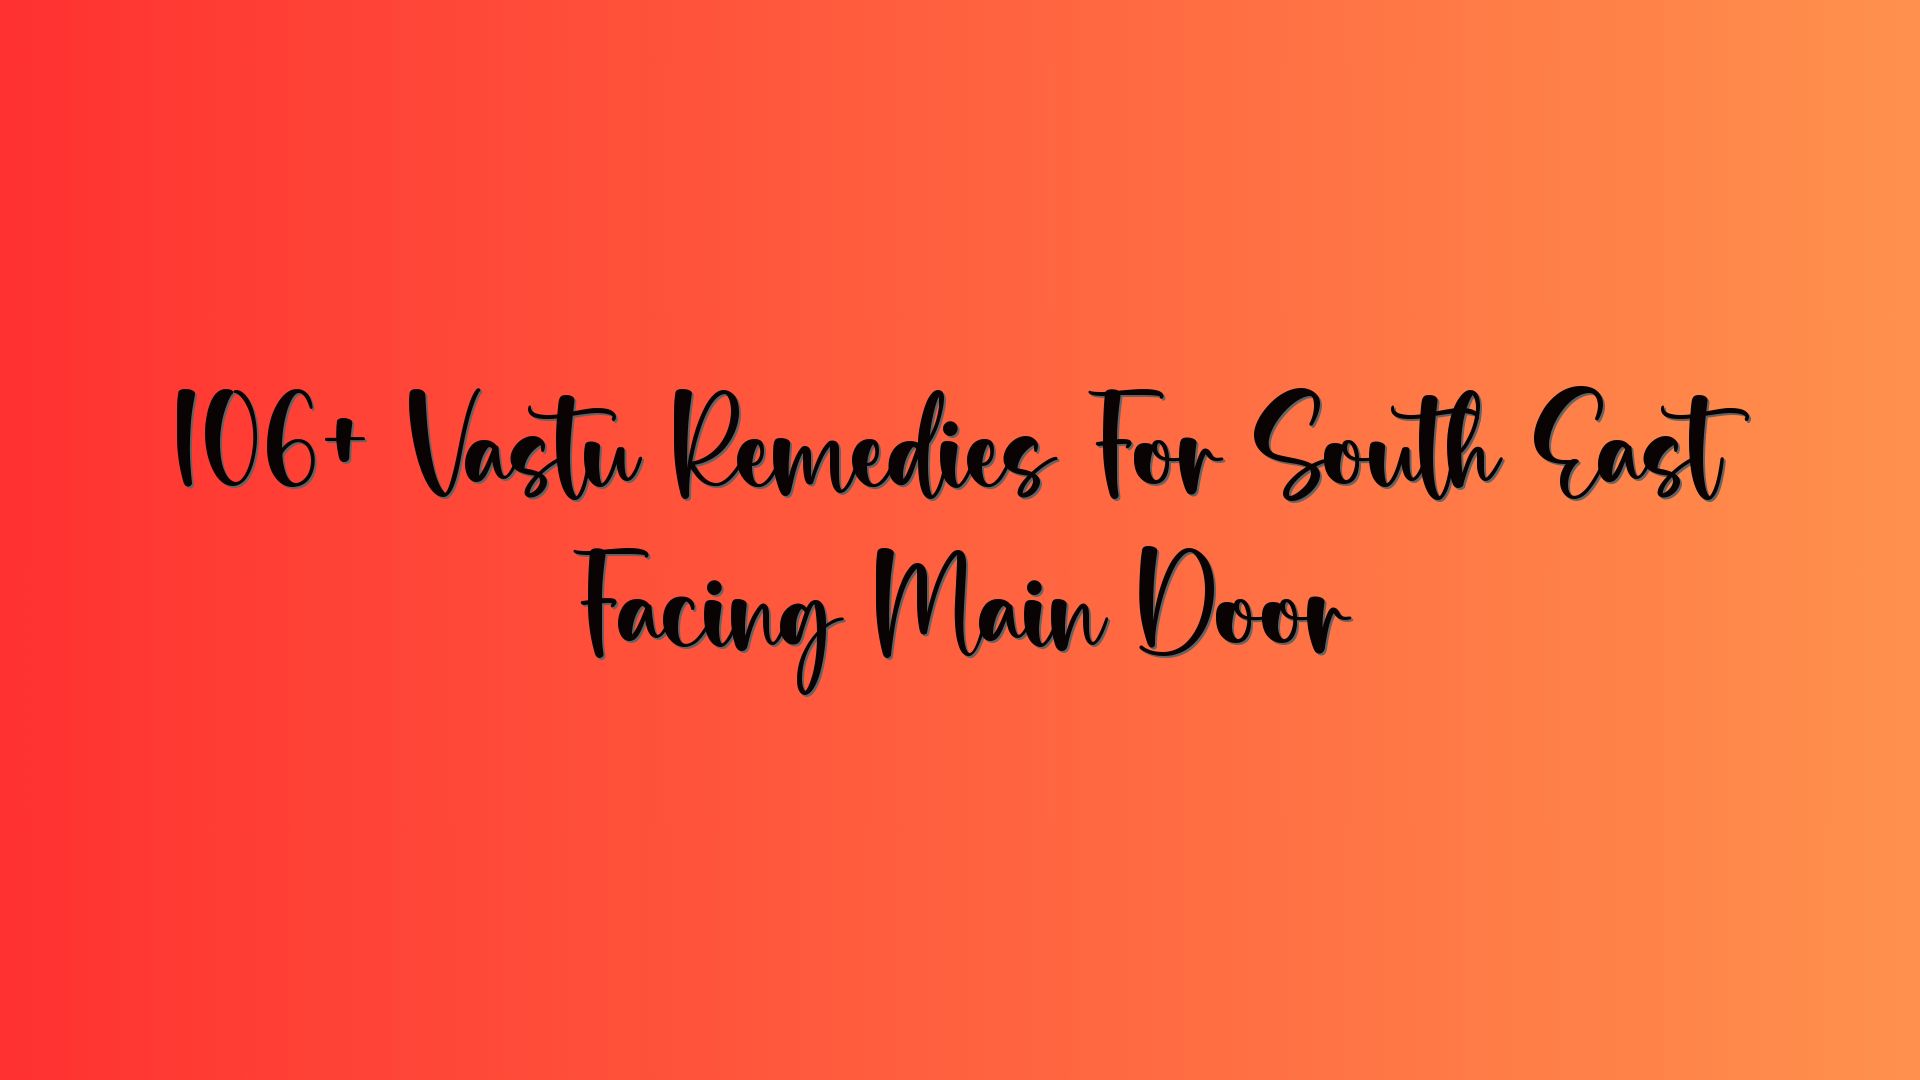 106+ Vastu Remedies For South East Facing Main Door